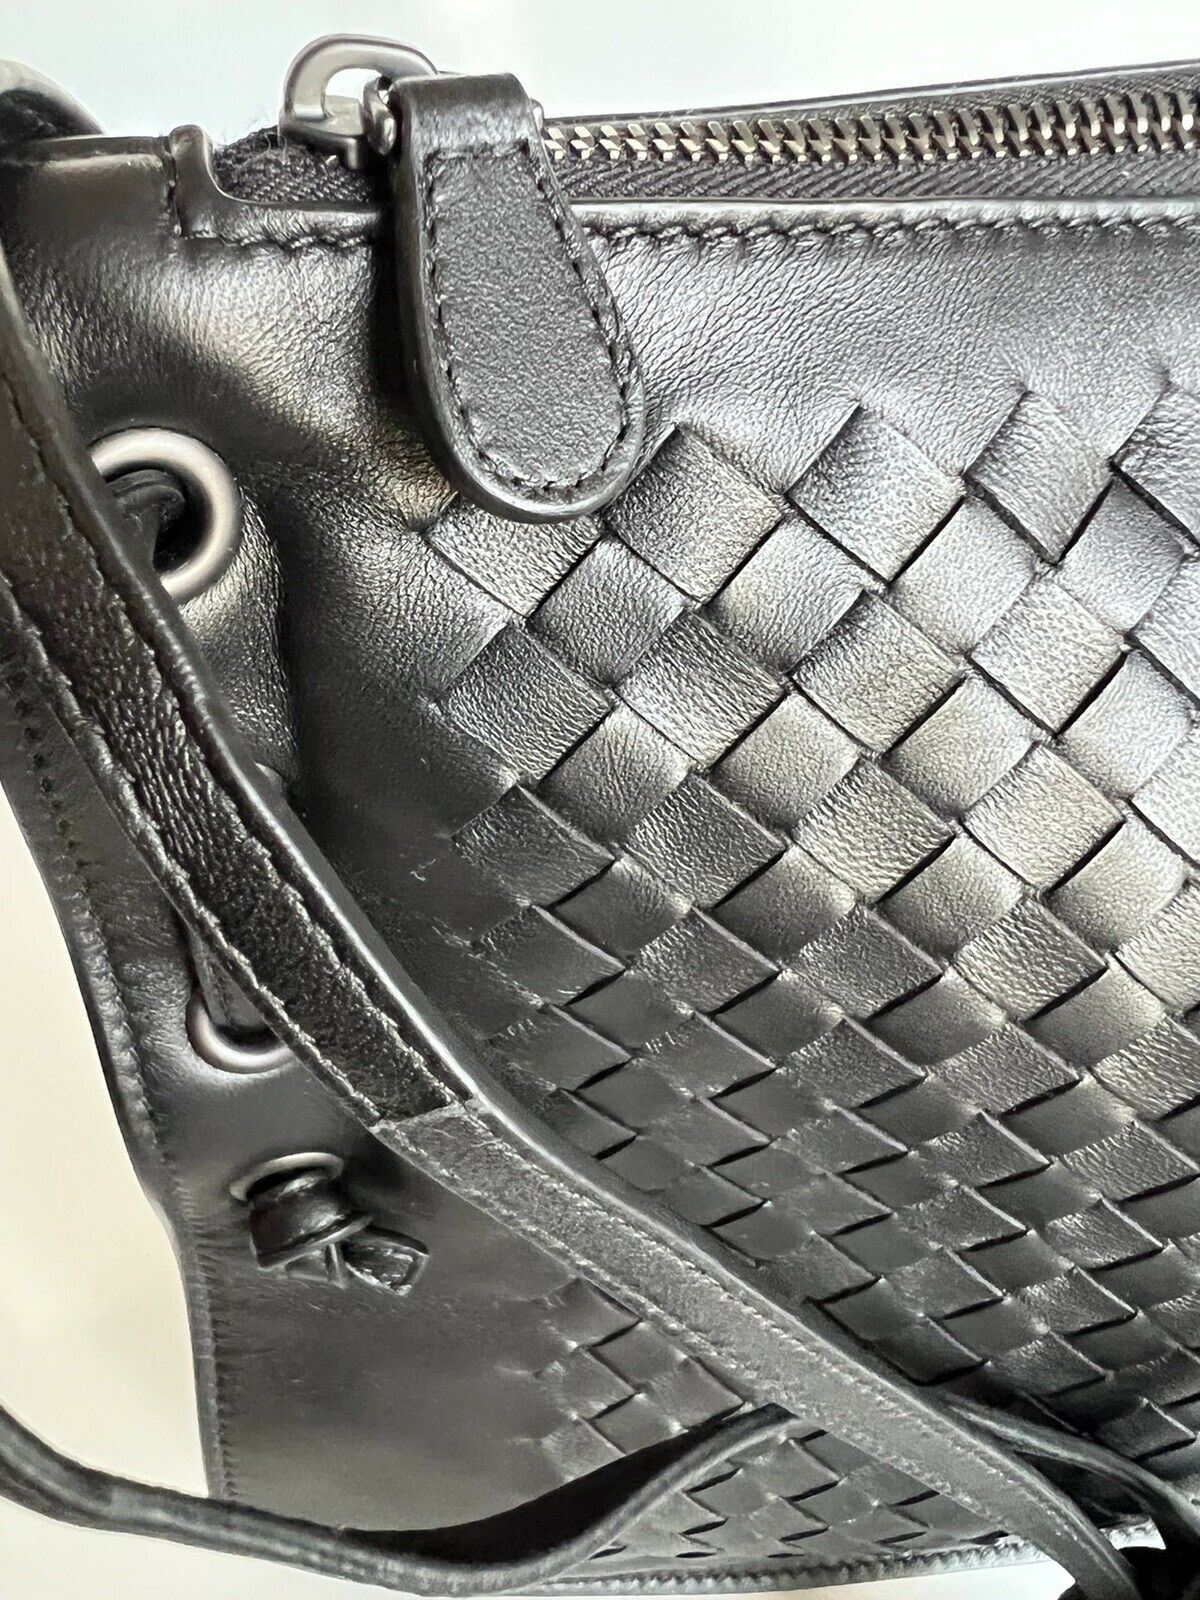 NWT Bottega Veneta Black Intrecciato Nappa Leather Crossbody Bag Italy 623963